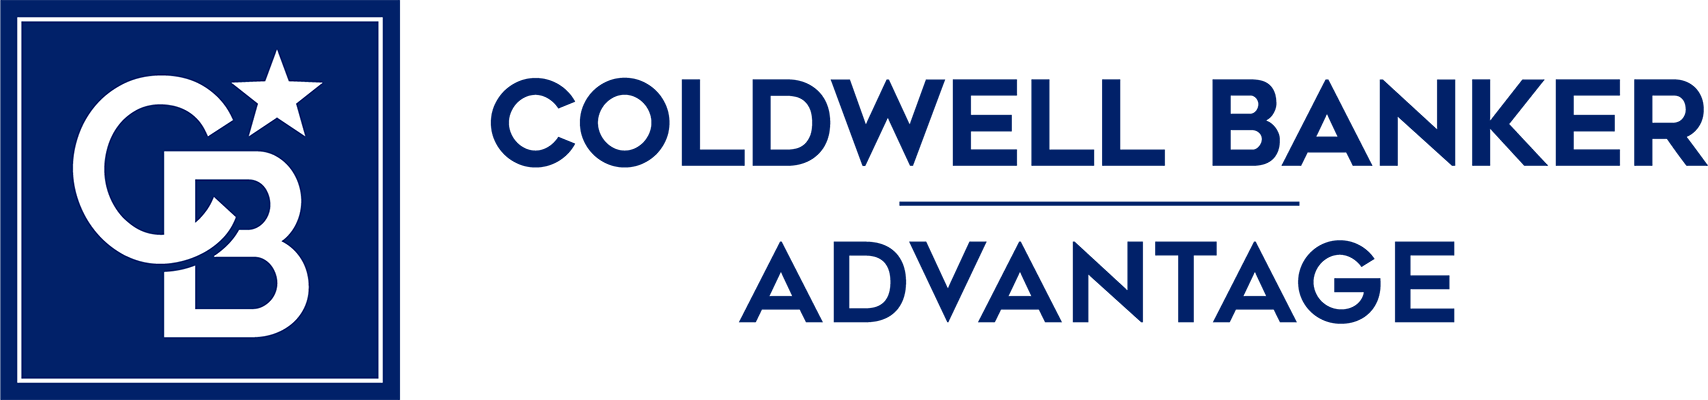 Aisha Buttar - Coldwell Banker Advantage Logo